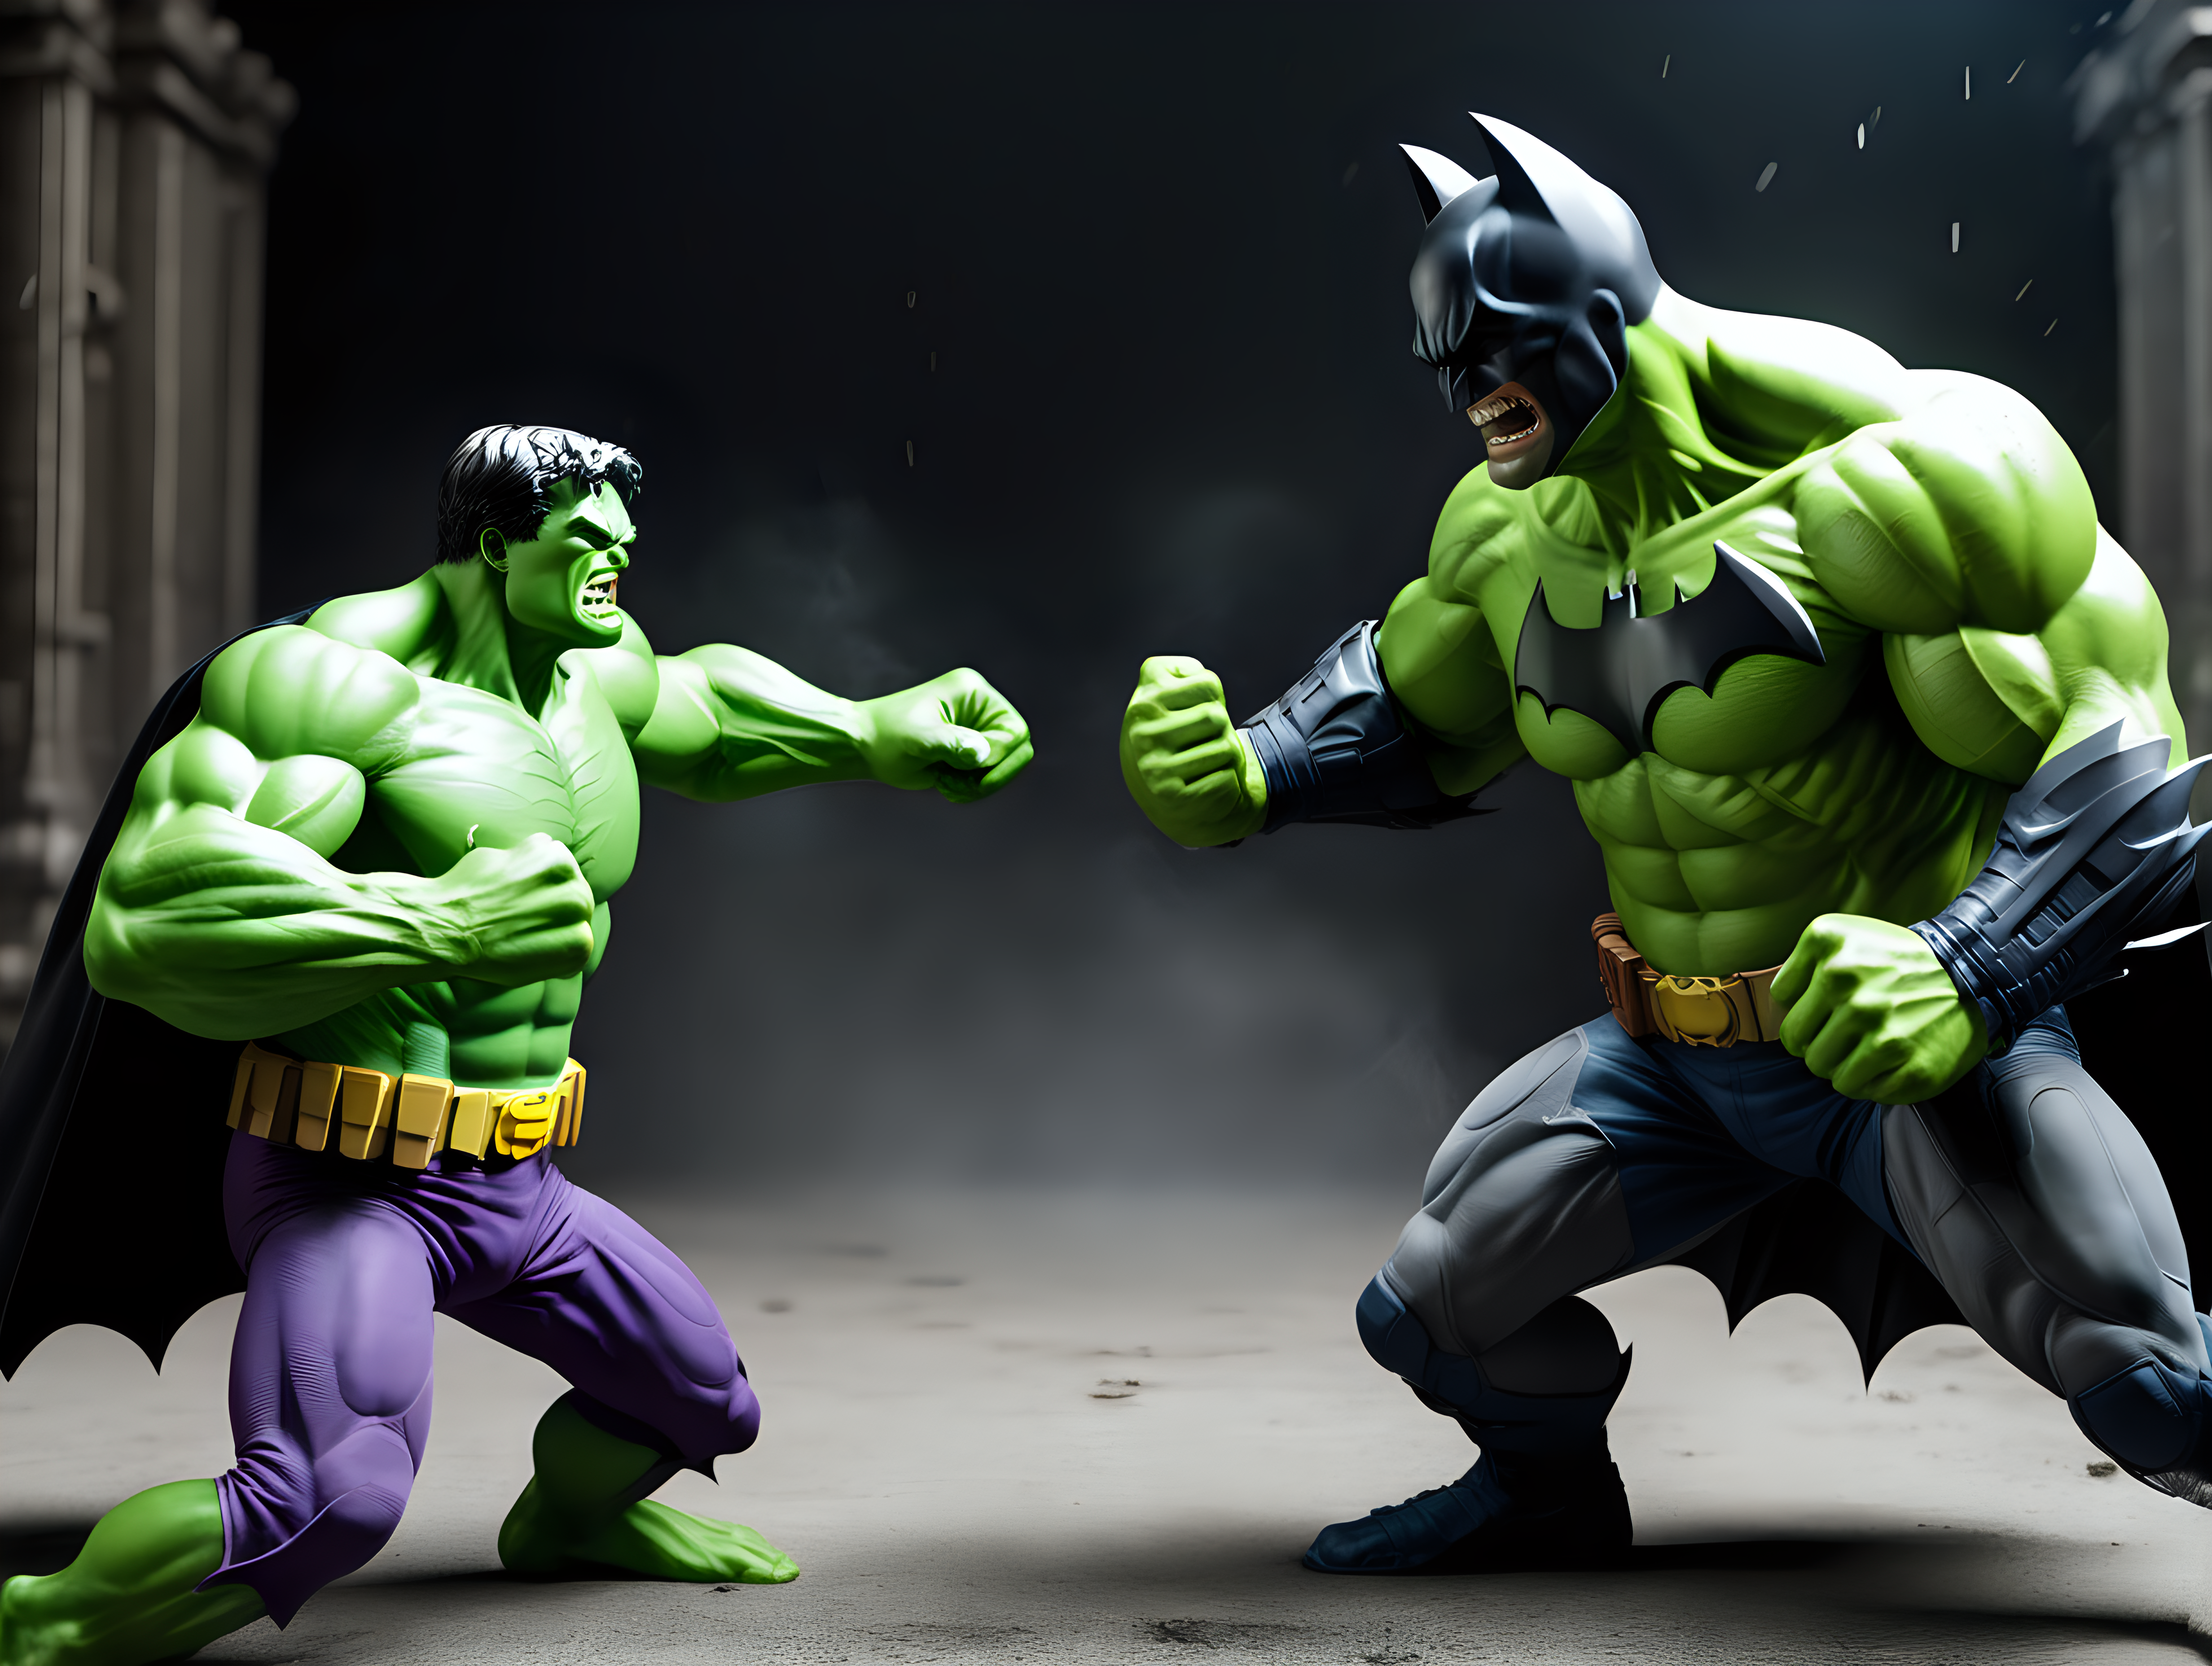 The Batman fighting the Hulk